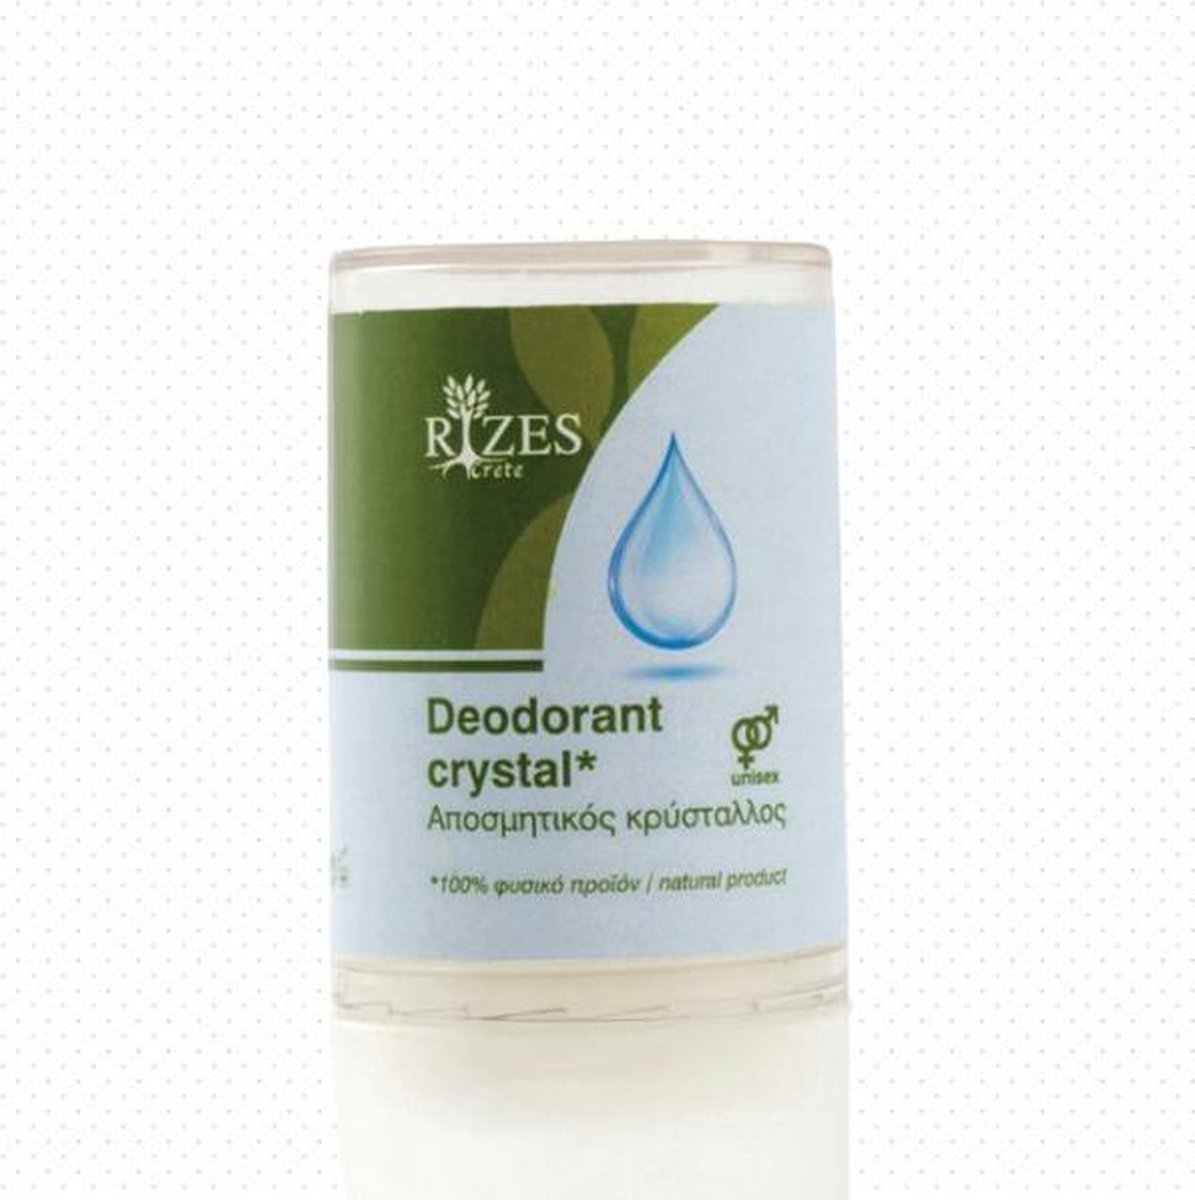 Deodorant kristal van Rizes Crete 120gr